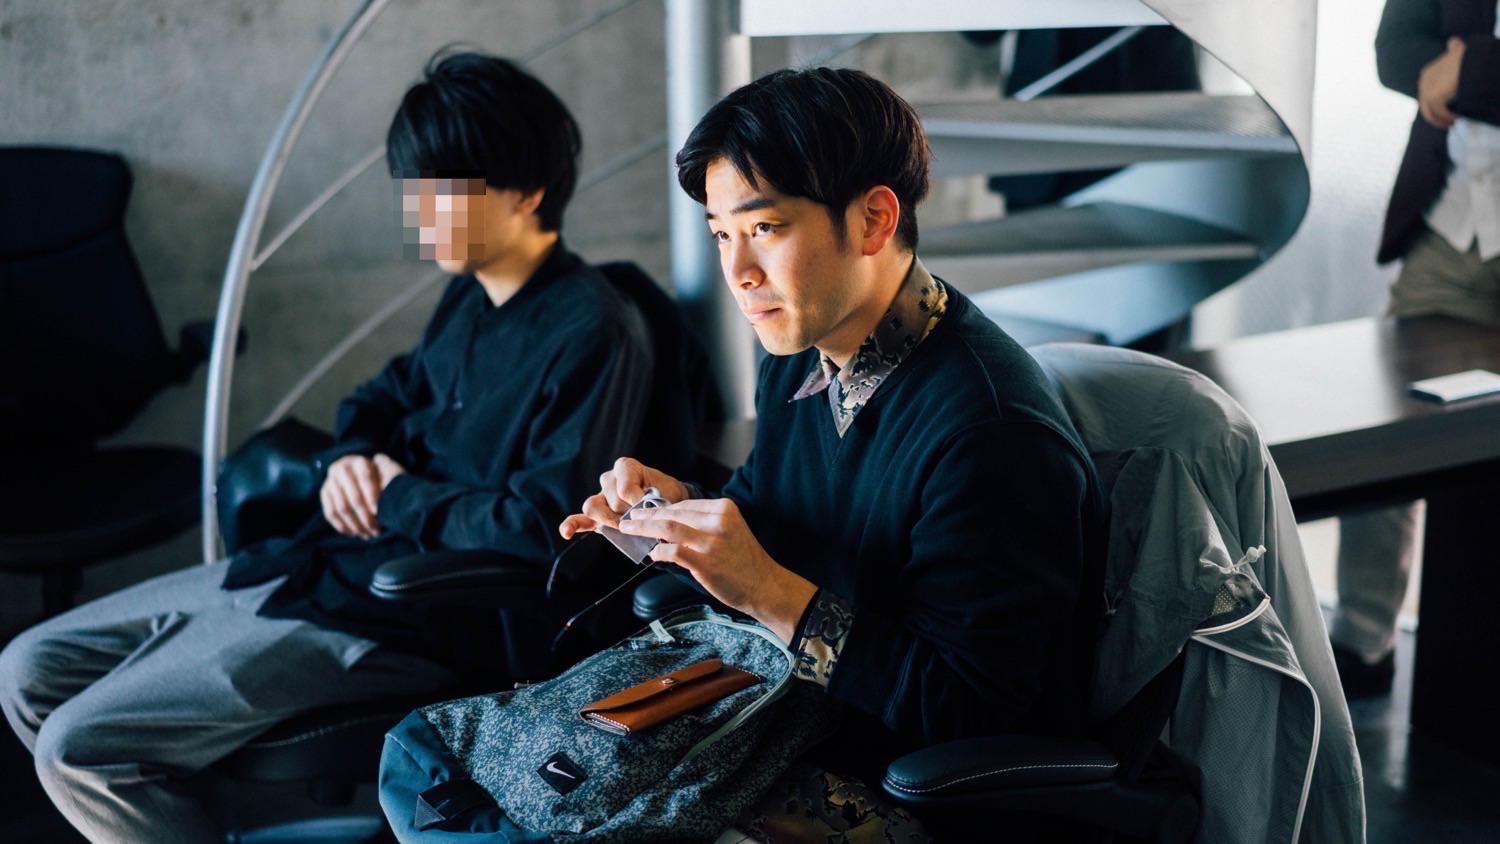 Tokyo fashion technology lab report 1 6